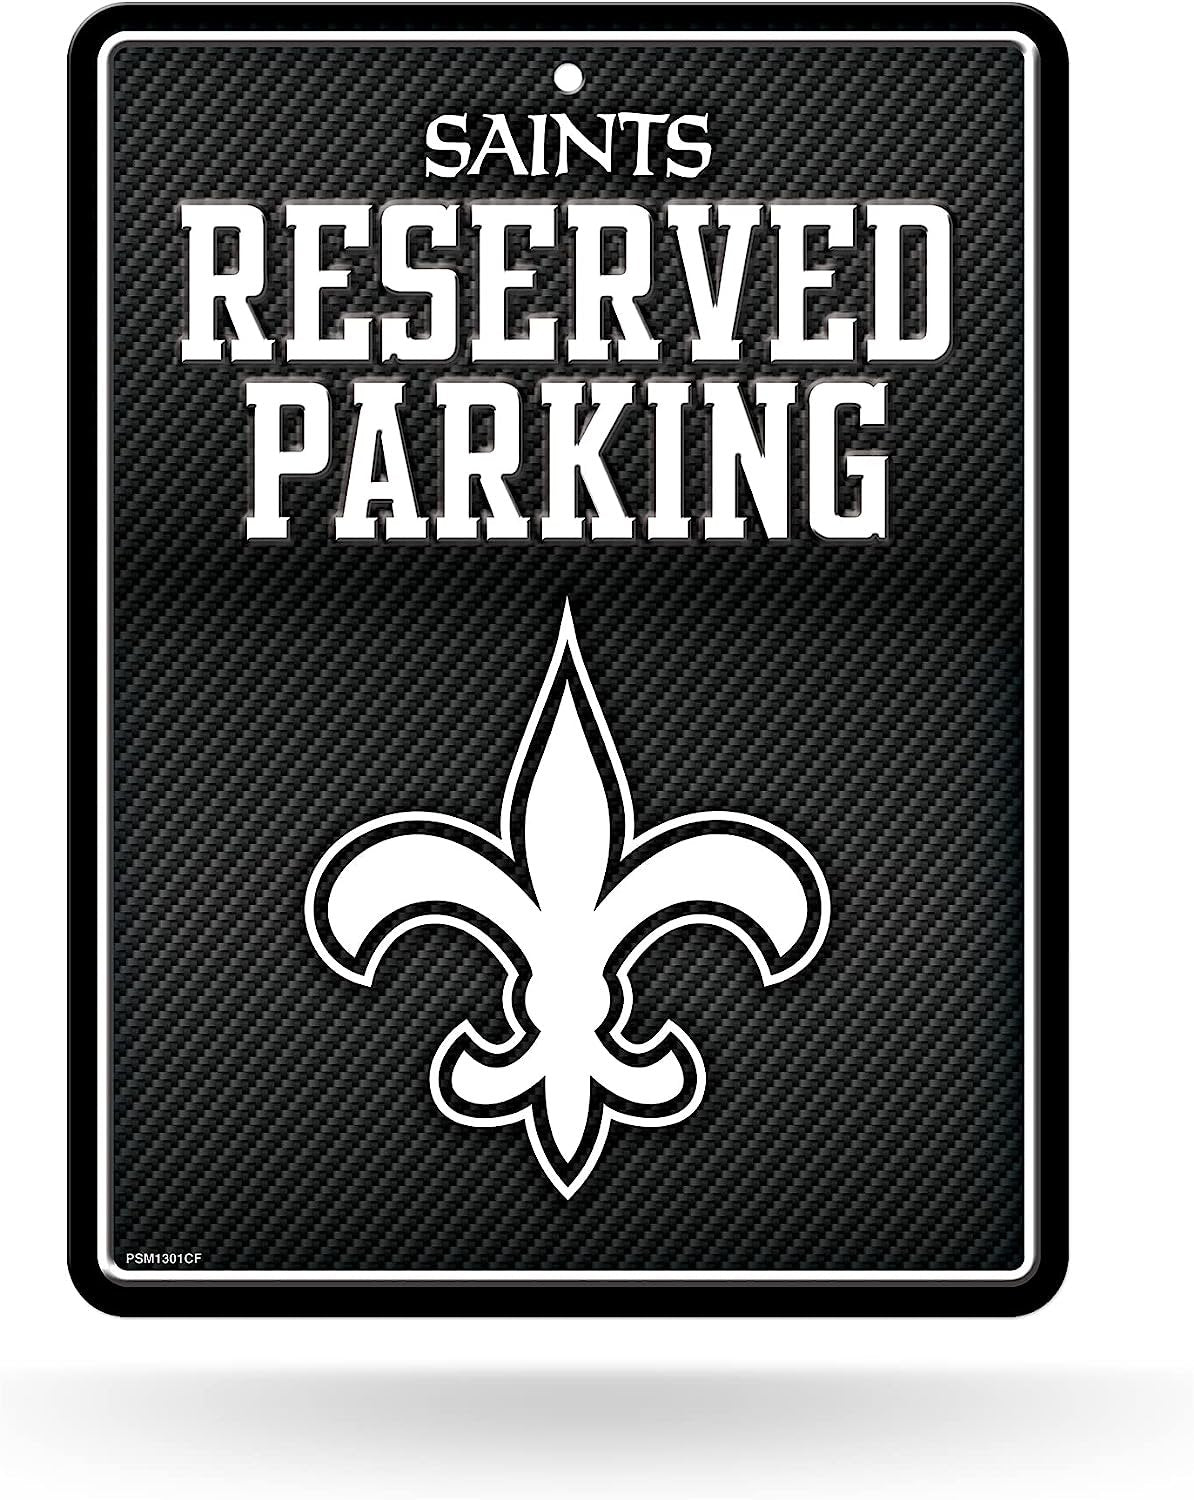 New Orleans Saints Metal Parking Novelty Wall Sign 8.5 x 11 Inch Carbon Fiber Design